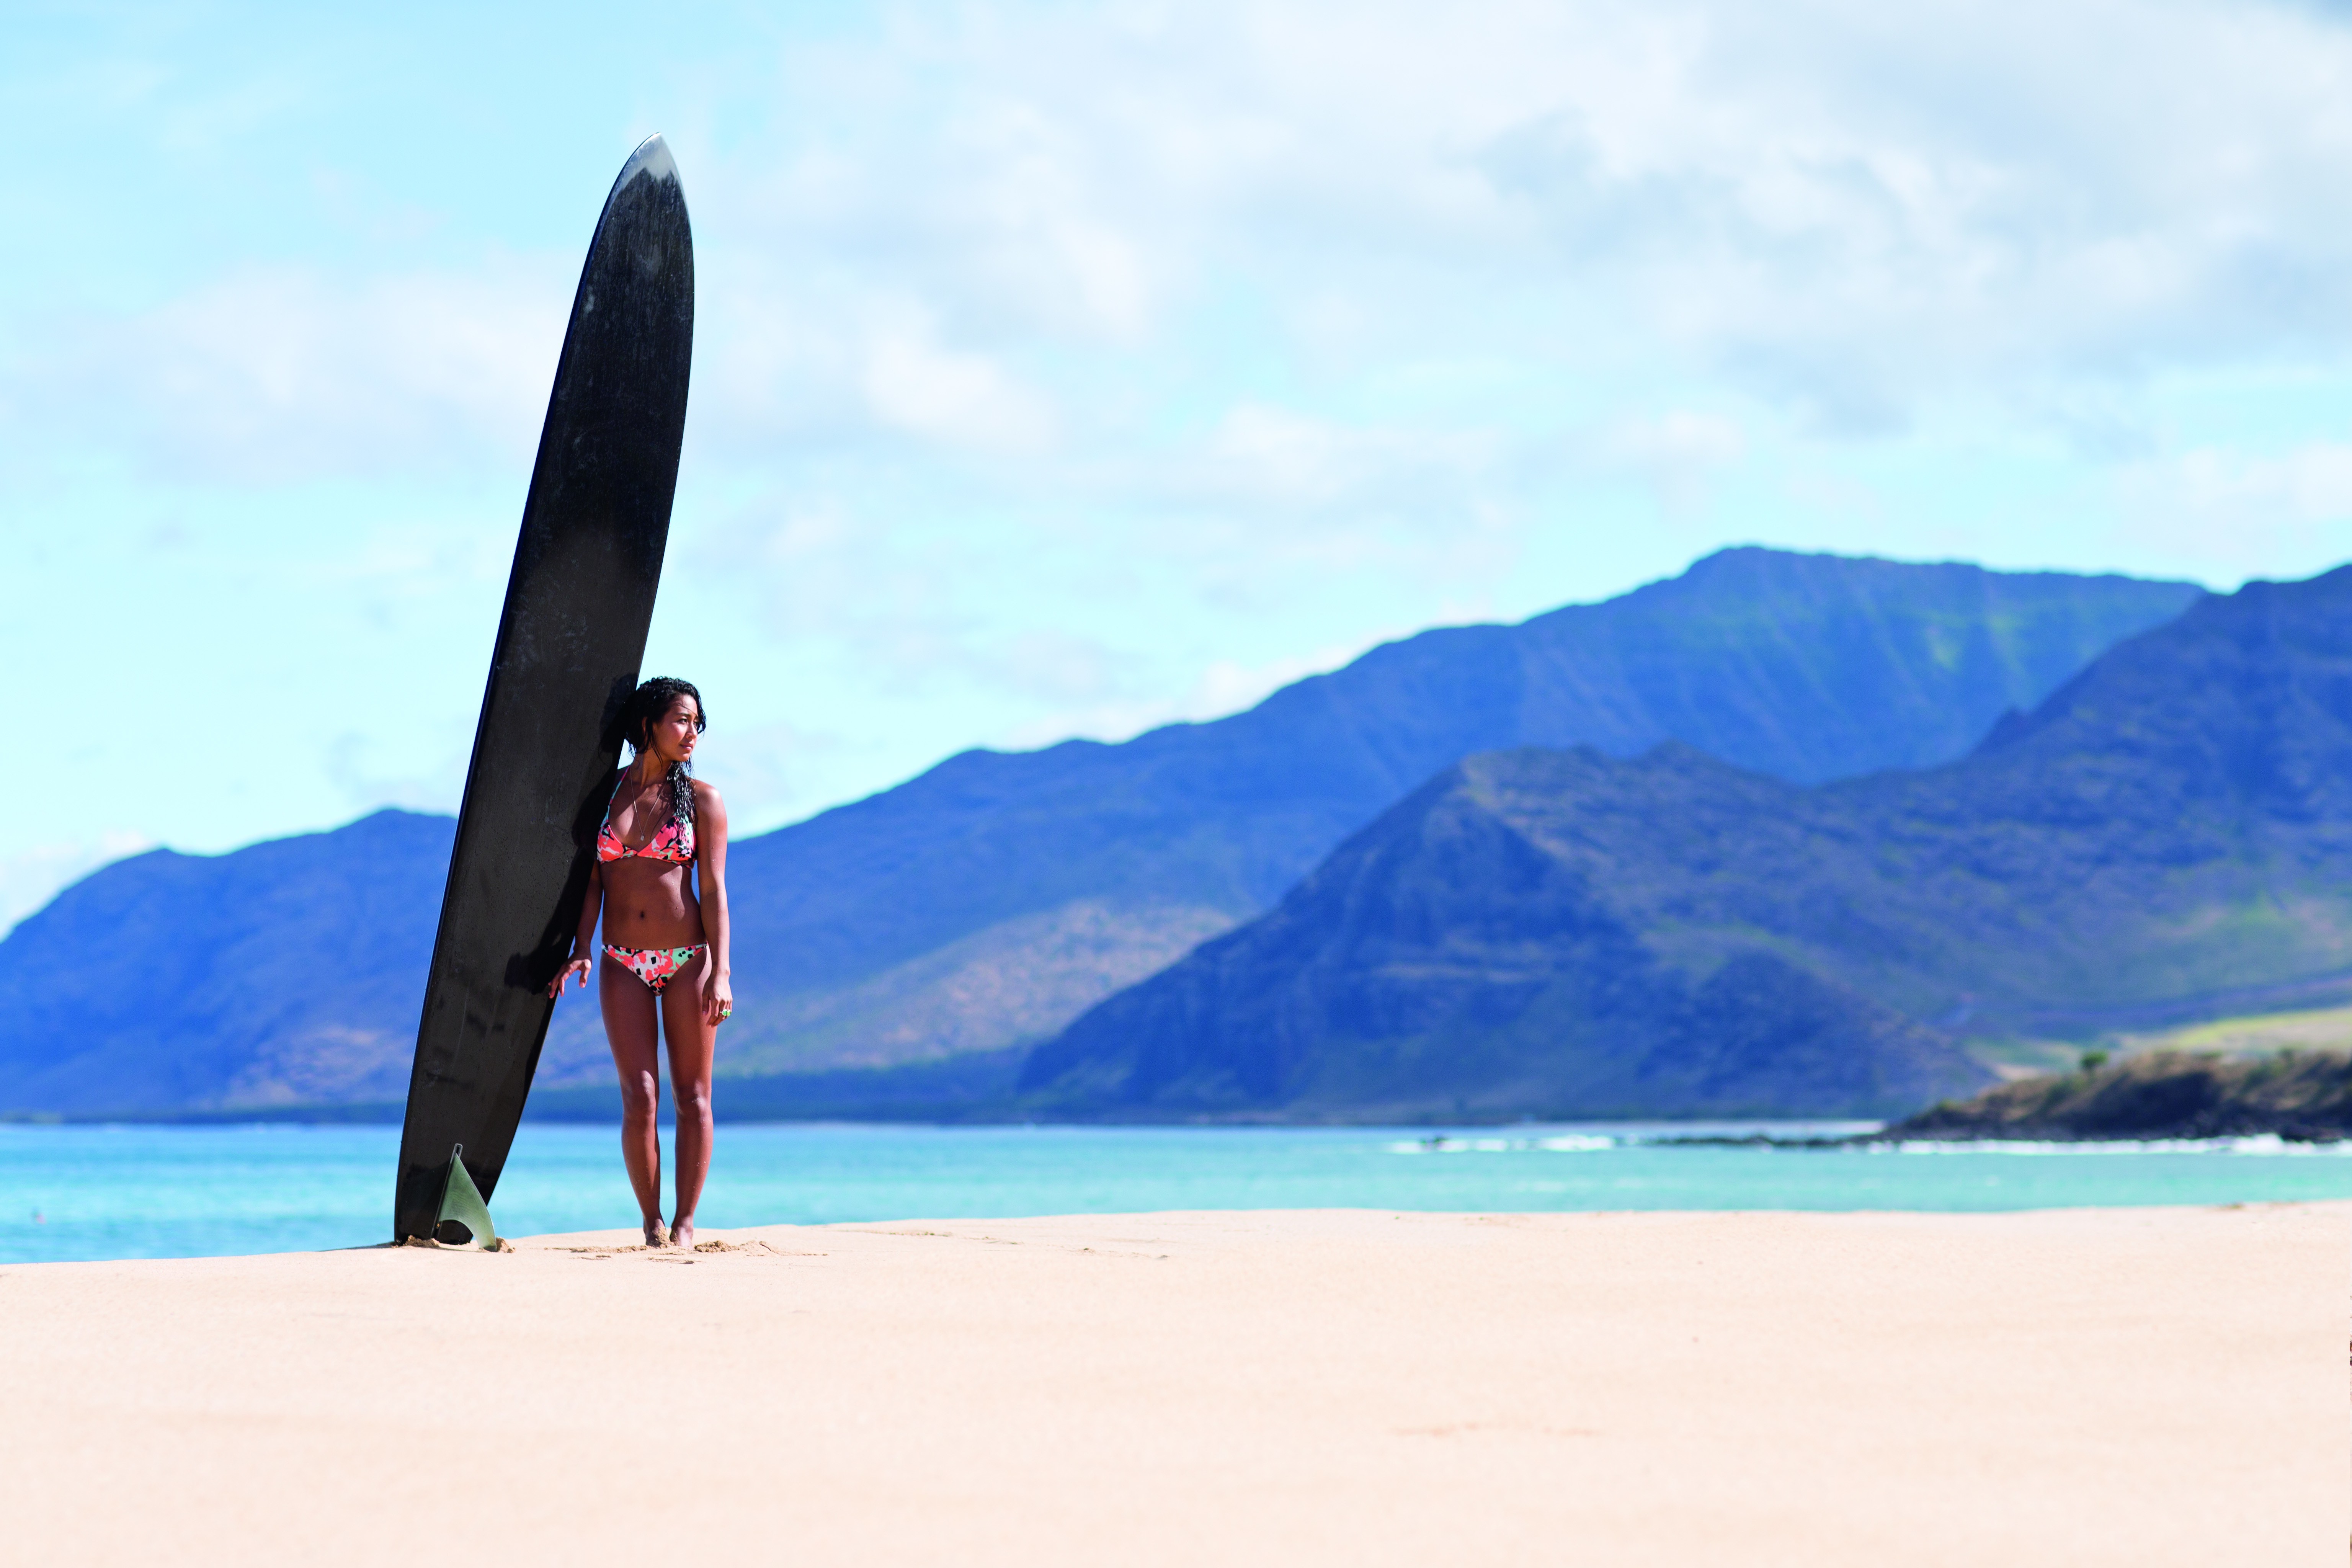 bikini wallpapers hd,beach,vacation,surfboard,surfing equipment,sea